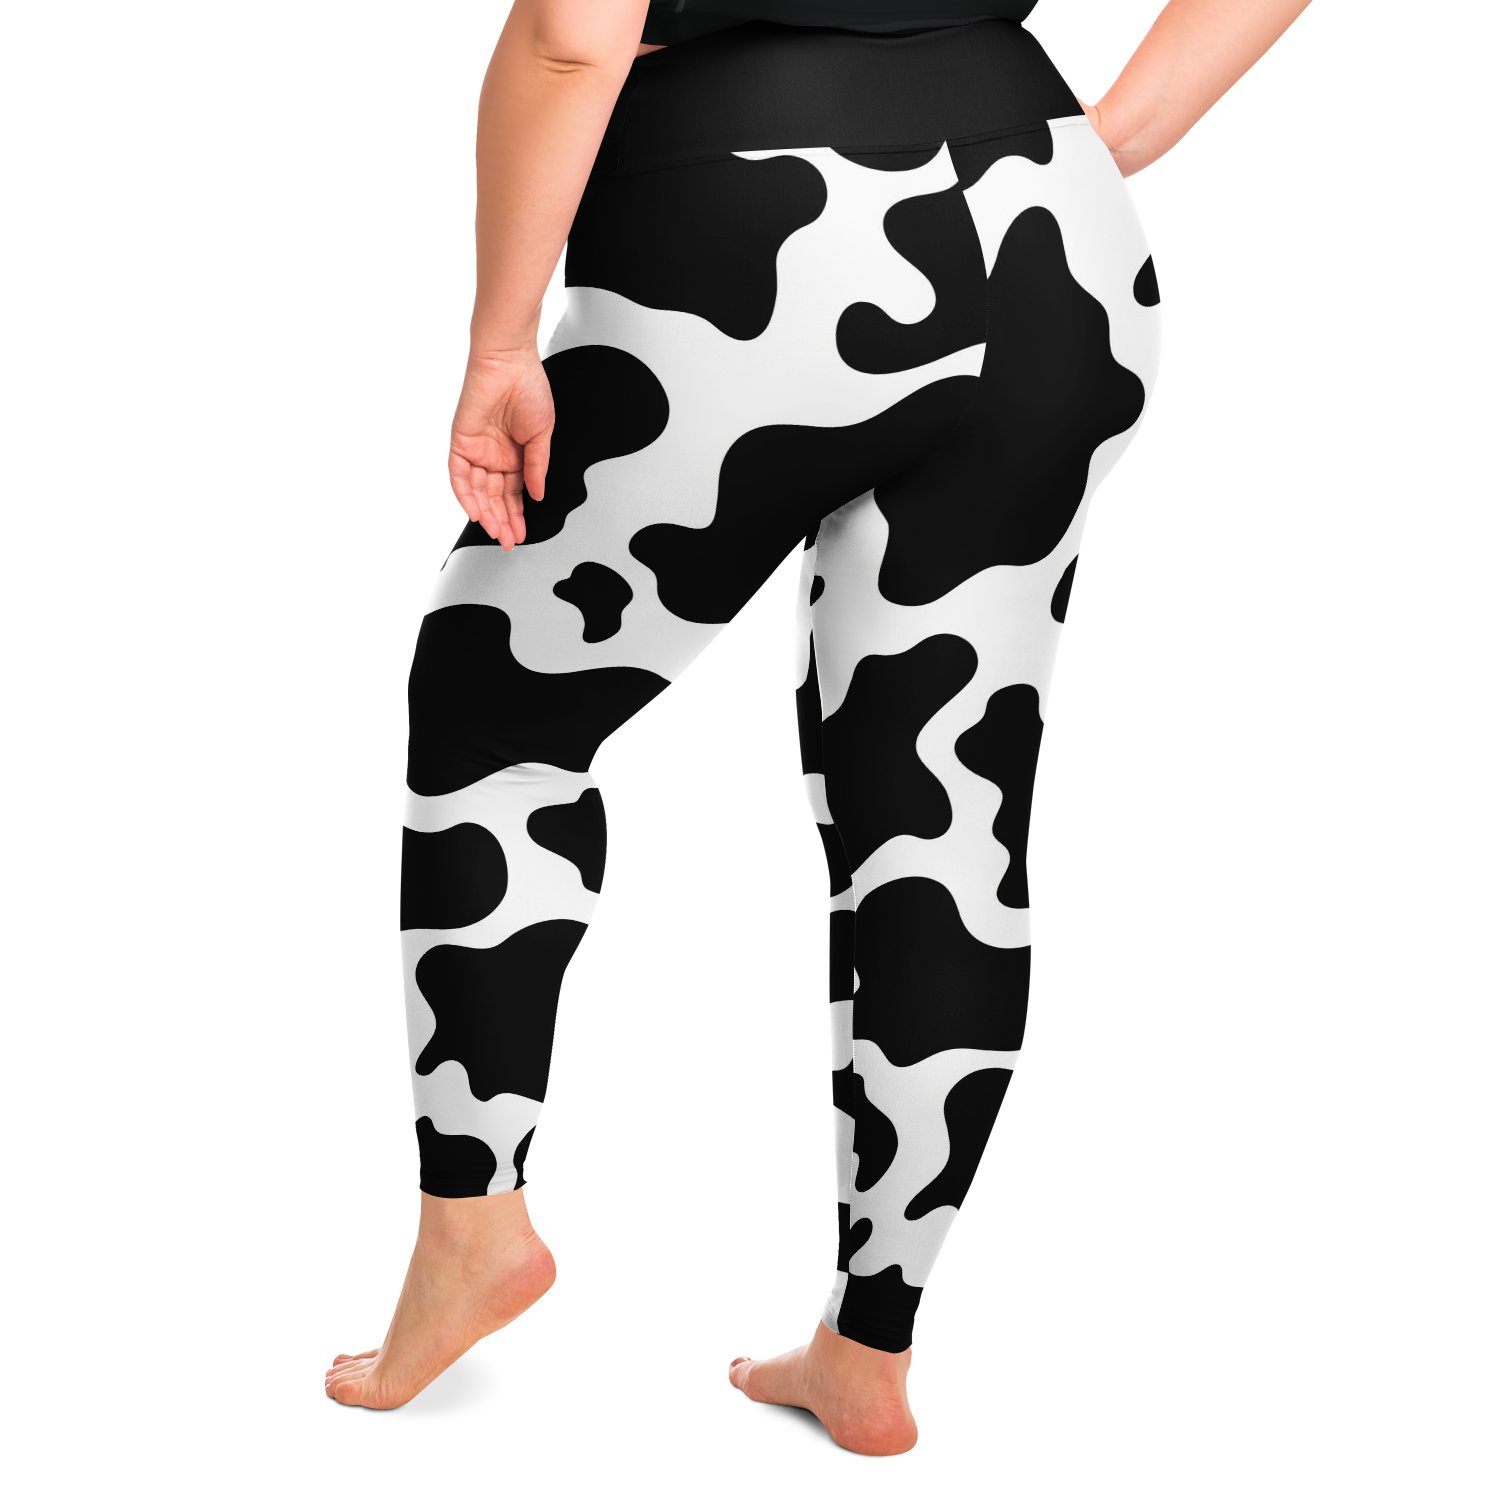 https://cow-print.com/wp-content/uploads/2021/12/plus-size-legging-aop-plus-size-women-s-cow-print-leggings-3.jpg